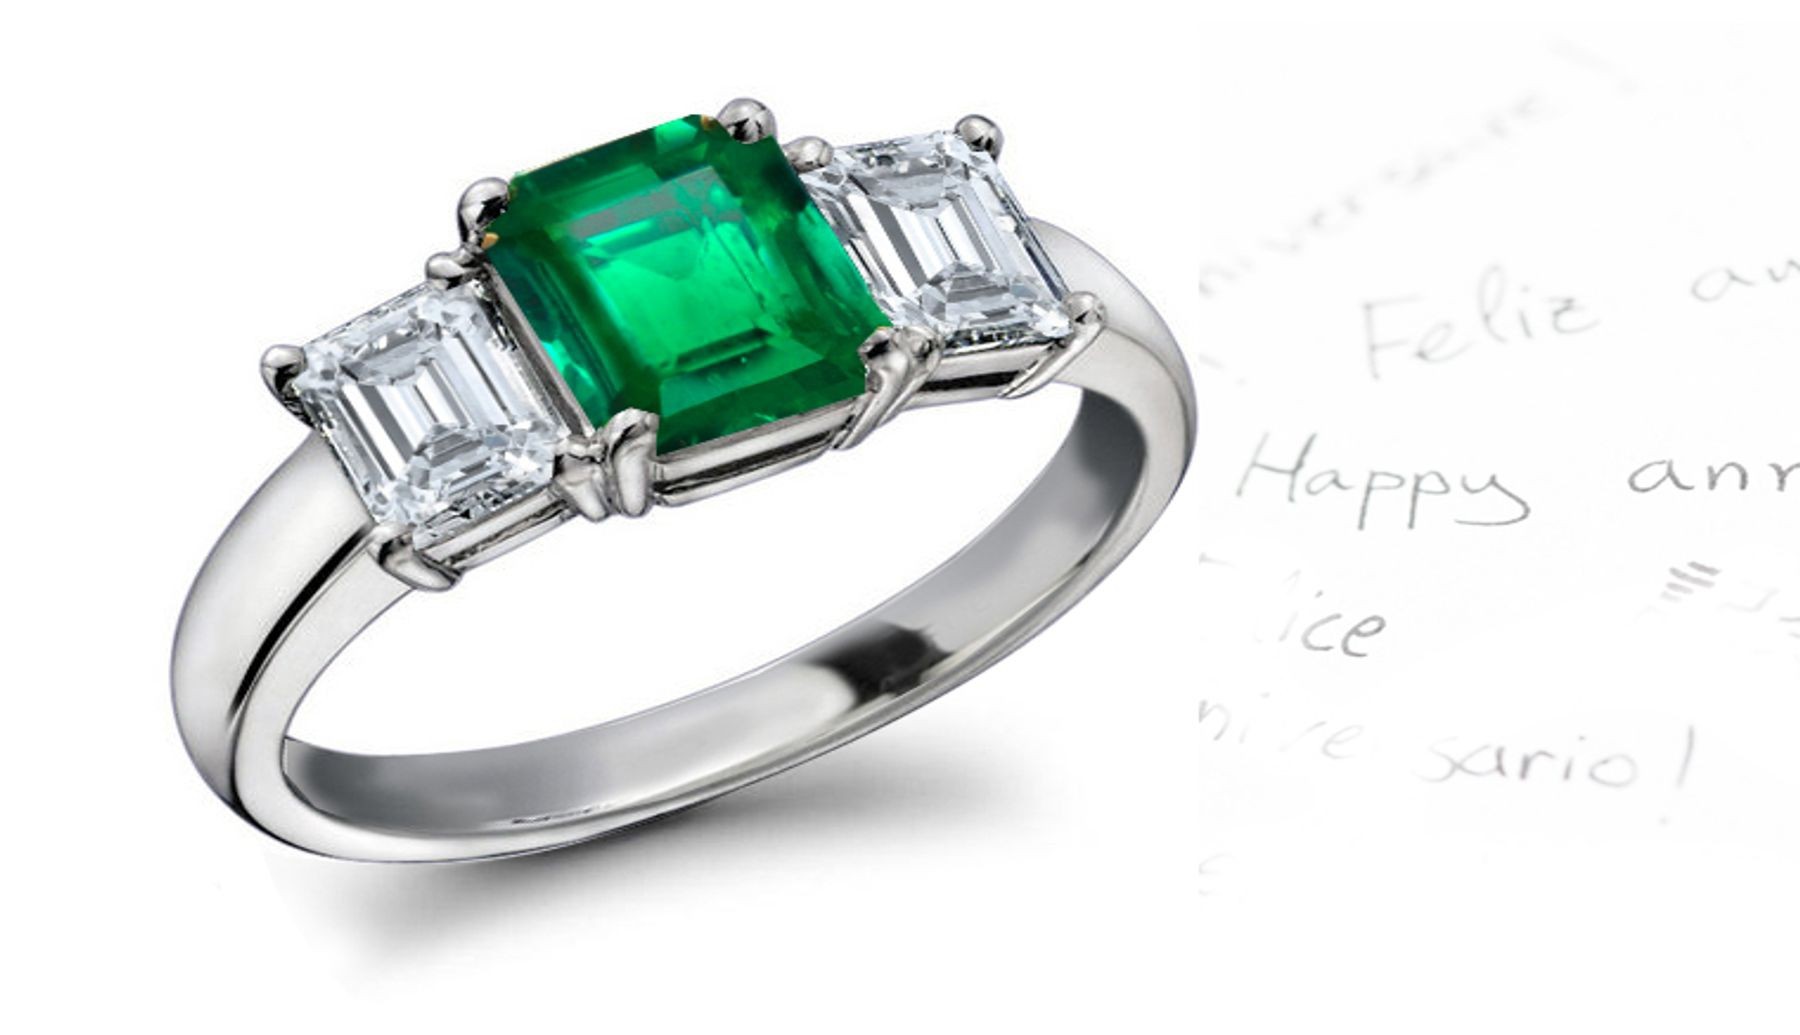 Enchanting: Stunning Lively Emerald Diamond Engagement Rings